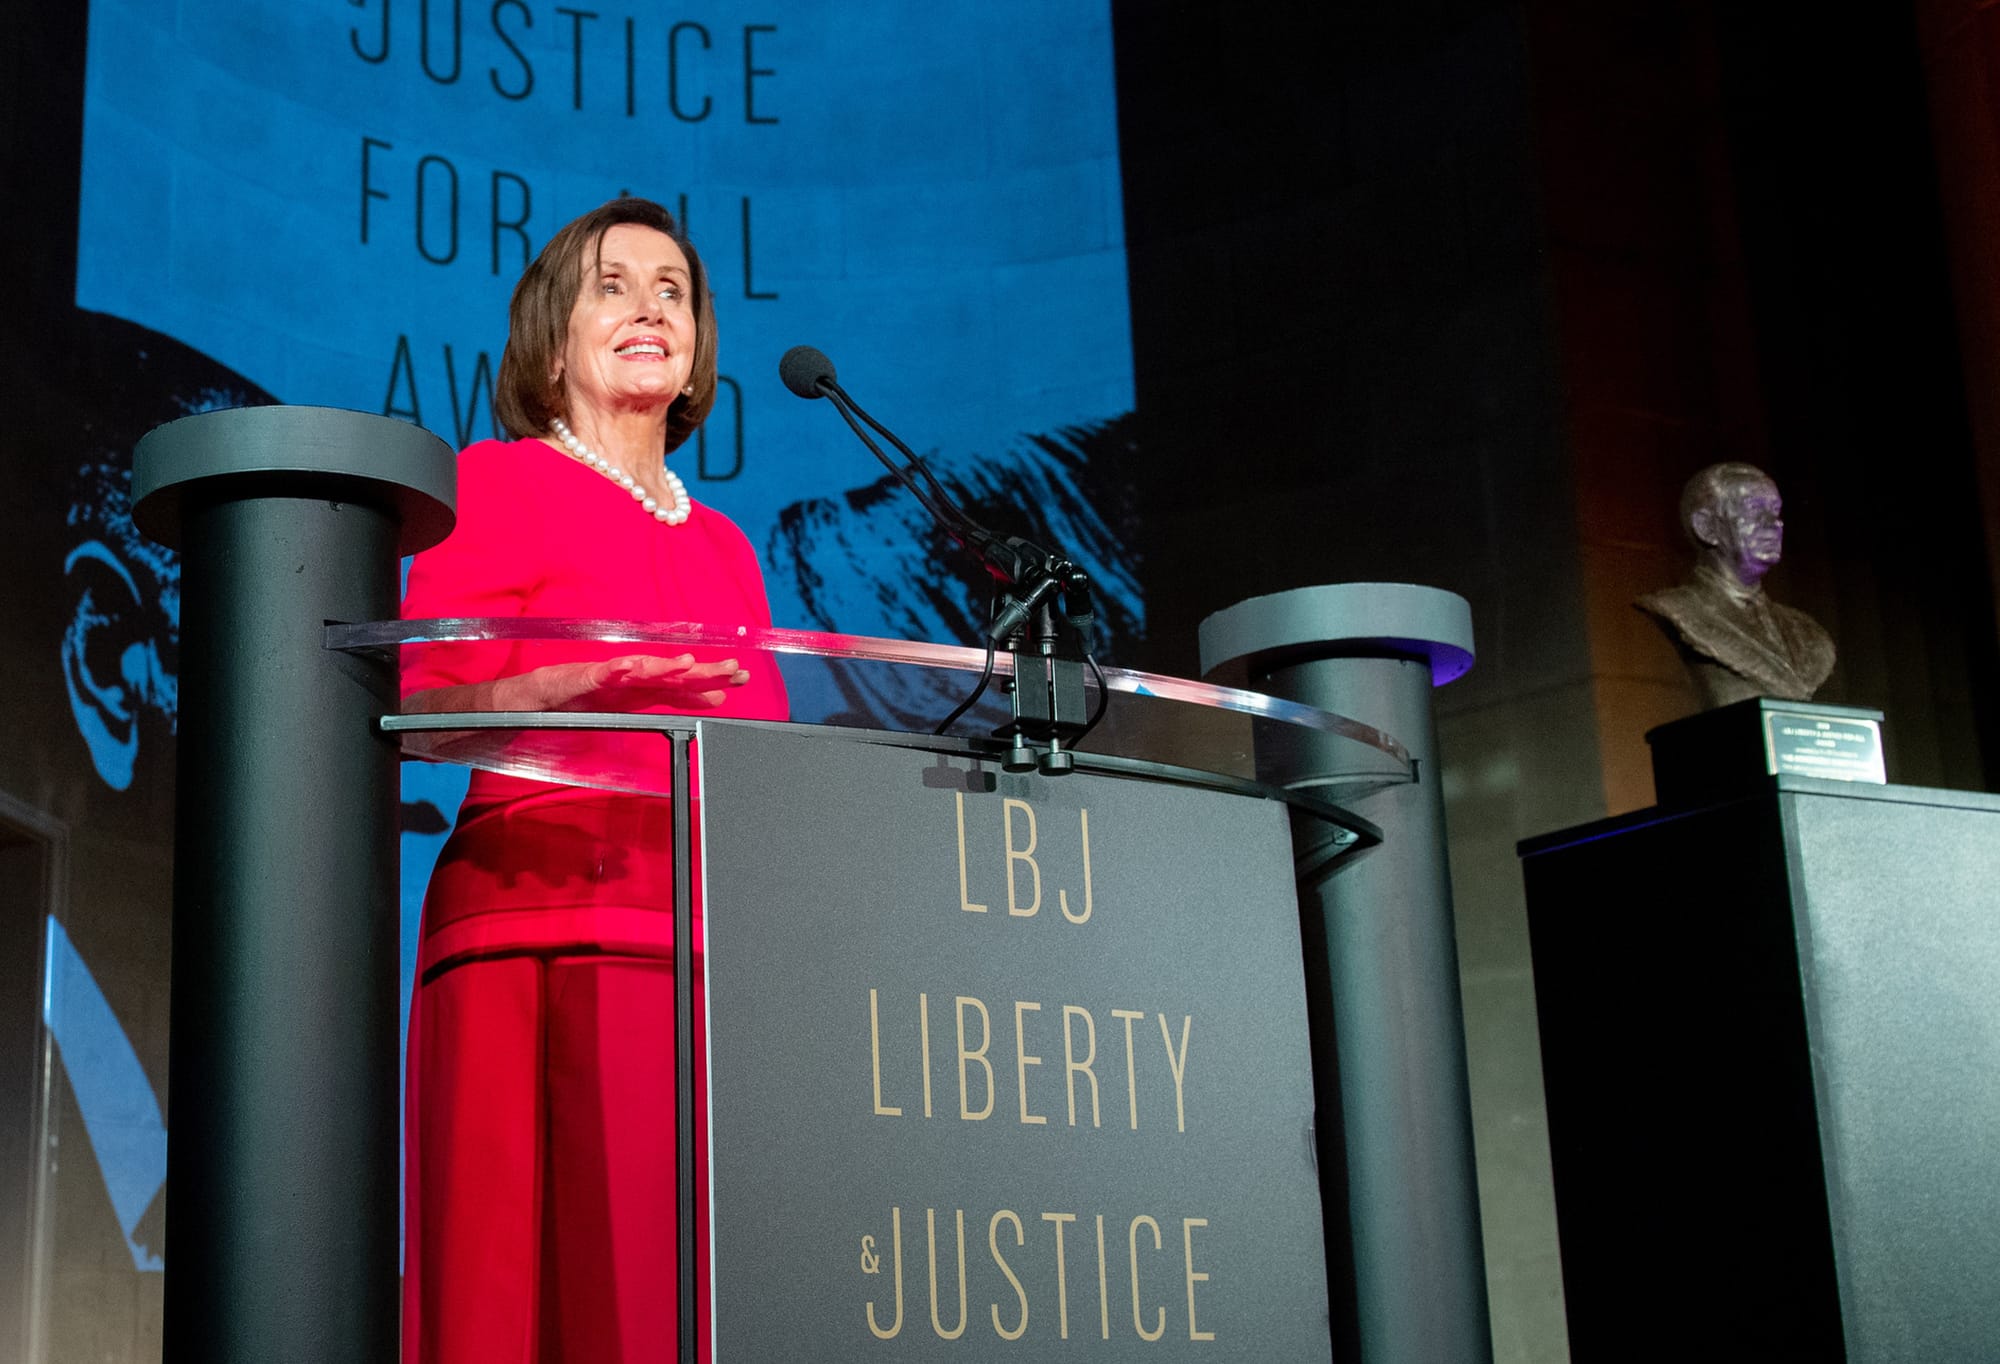 Speaker Nancy Pelosi. LBJ Foundation photo by Daniel Swartz, 2019.